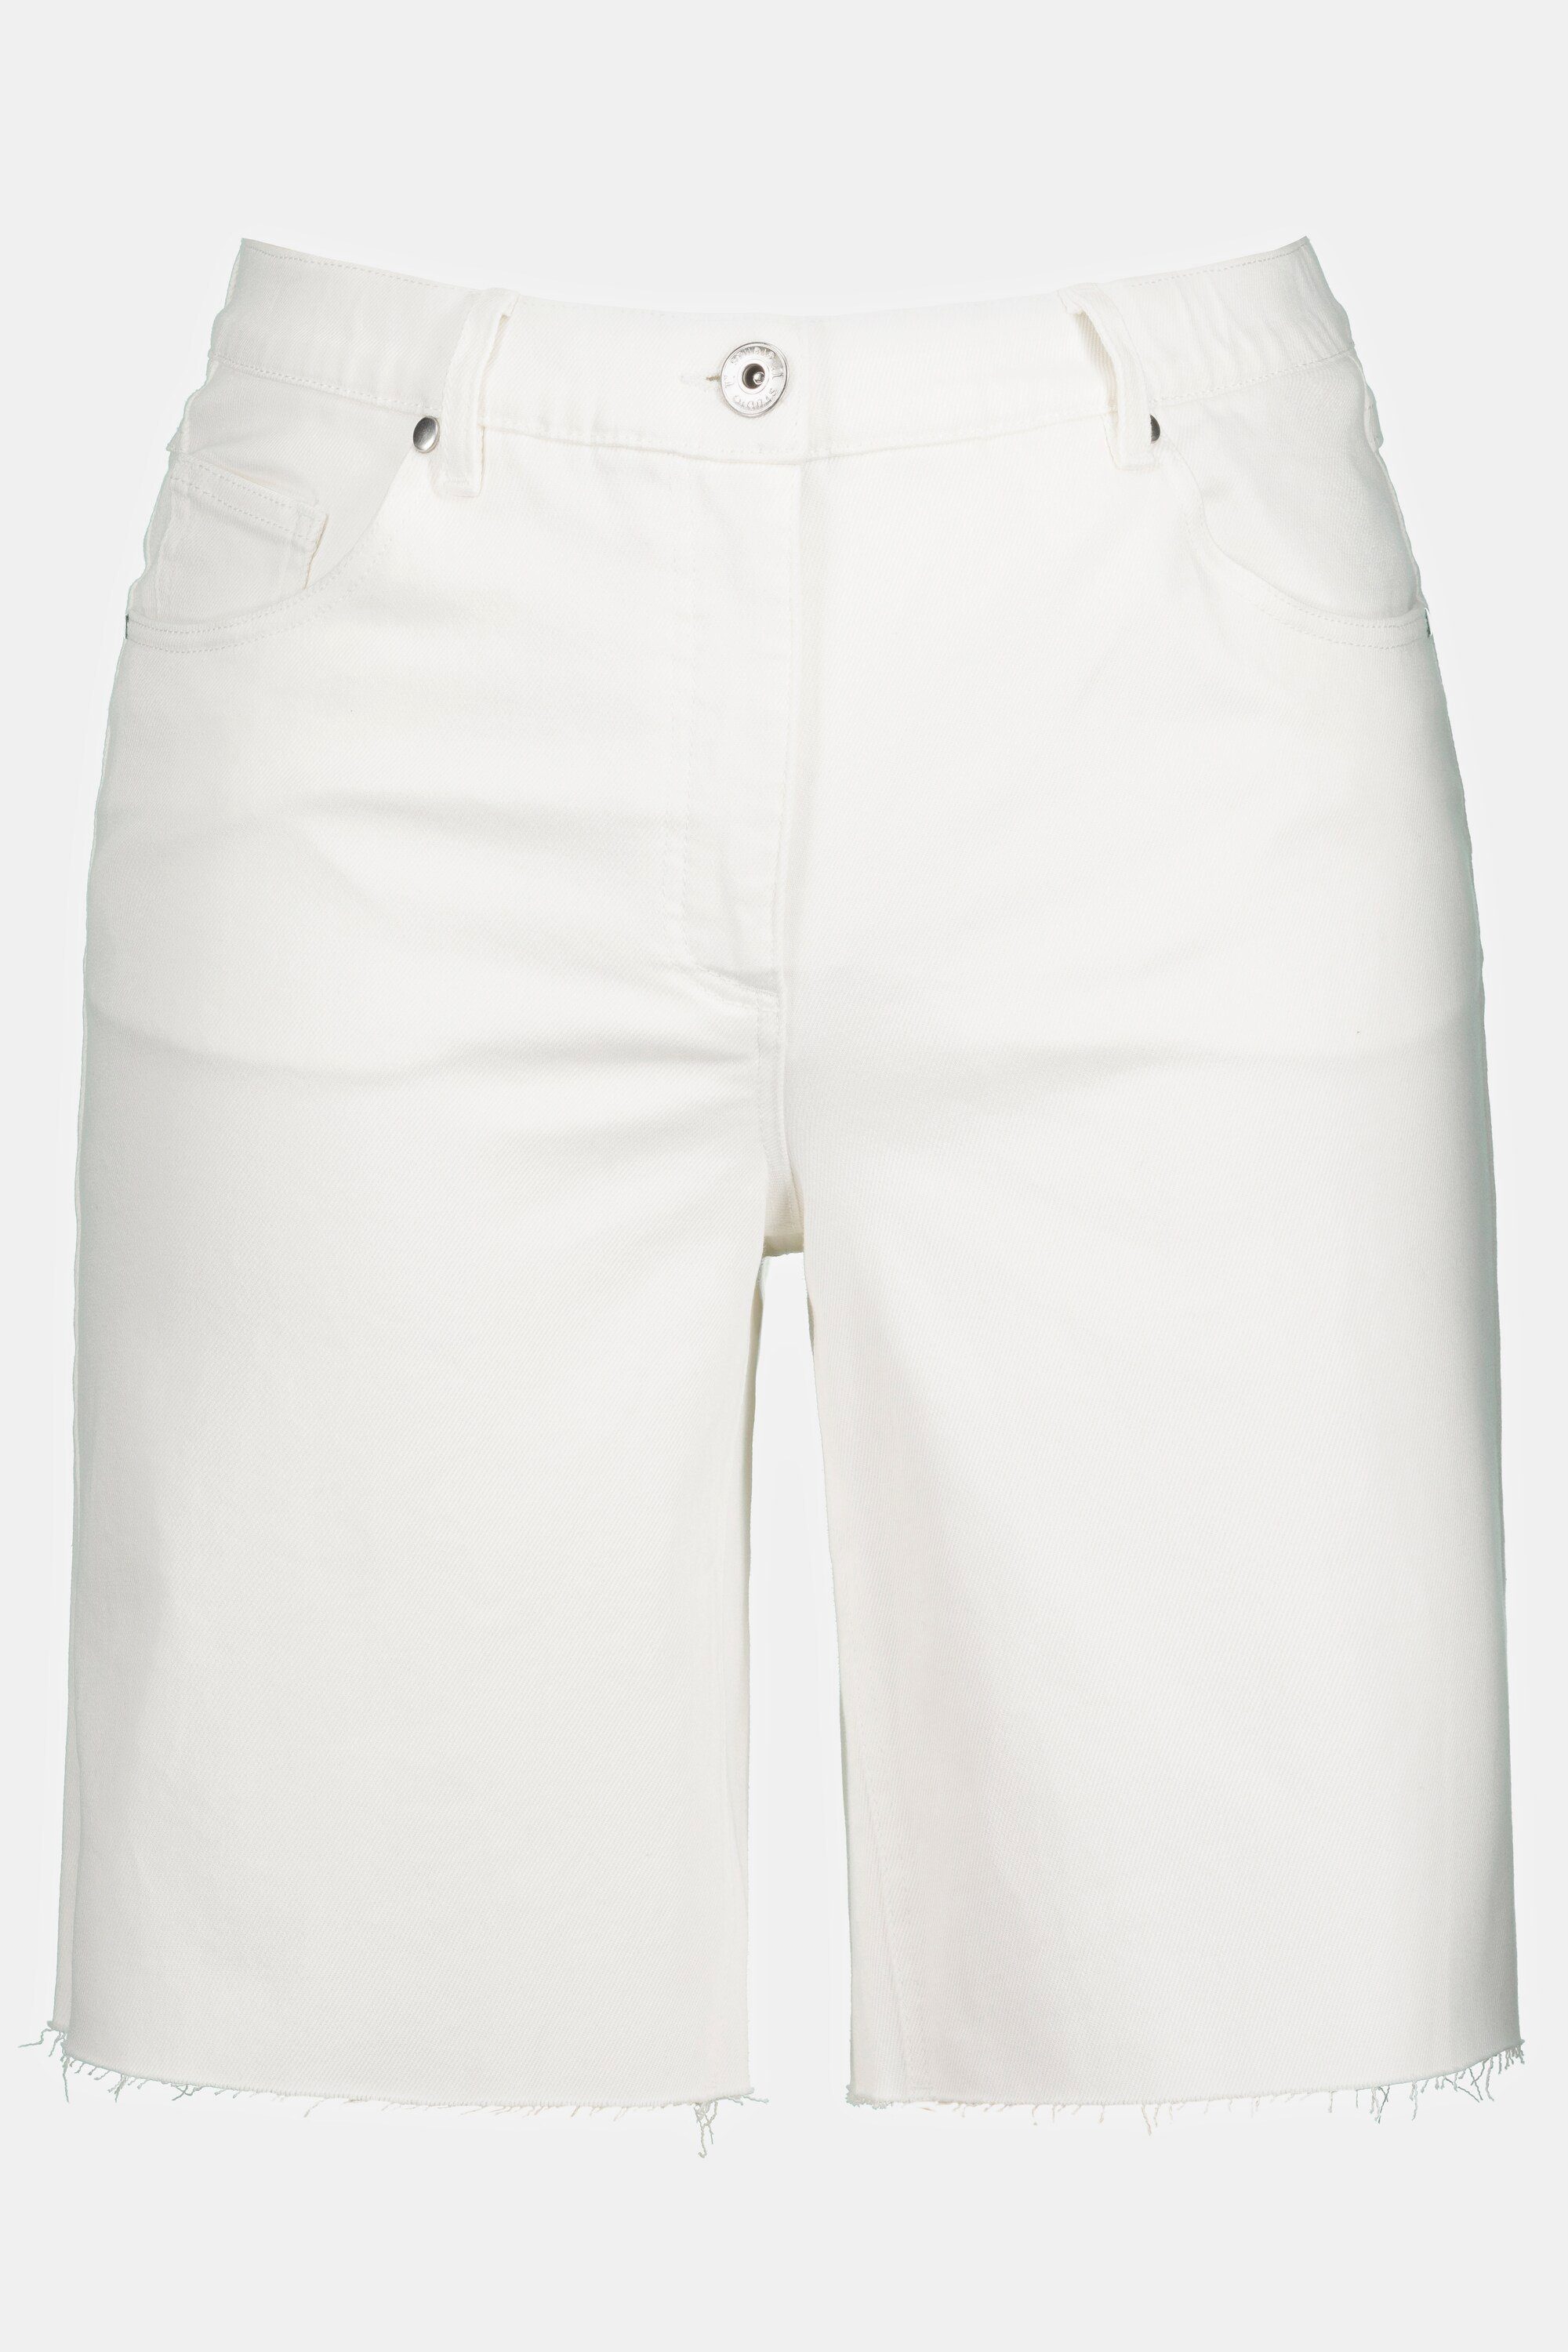 Waist Jeans-Shorts High Jeansshorts offwhite 5-Pocket Studio Untold